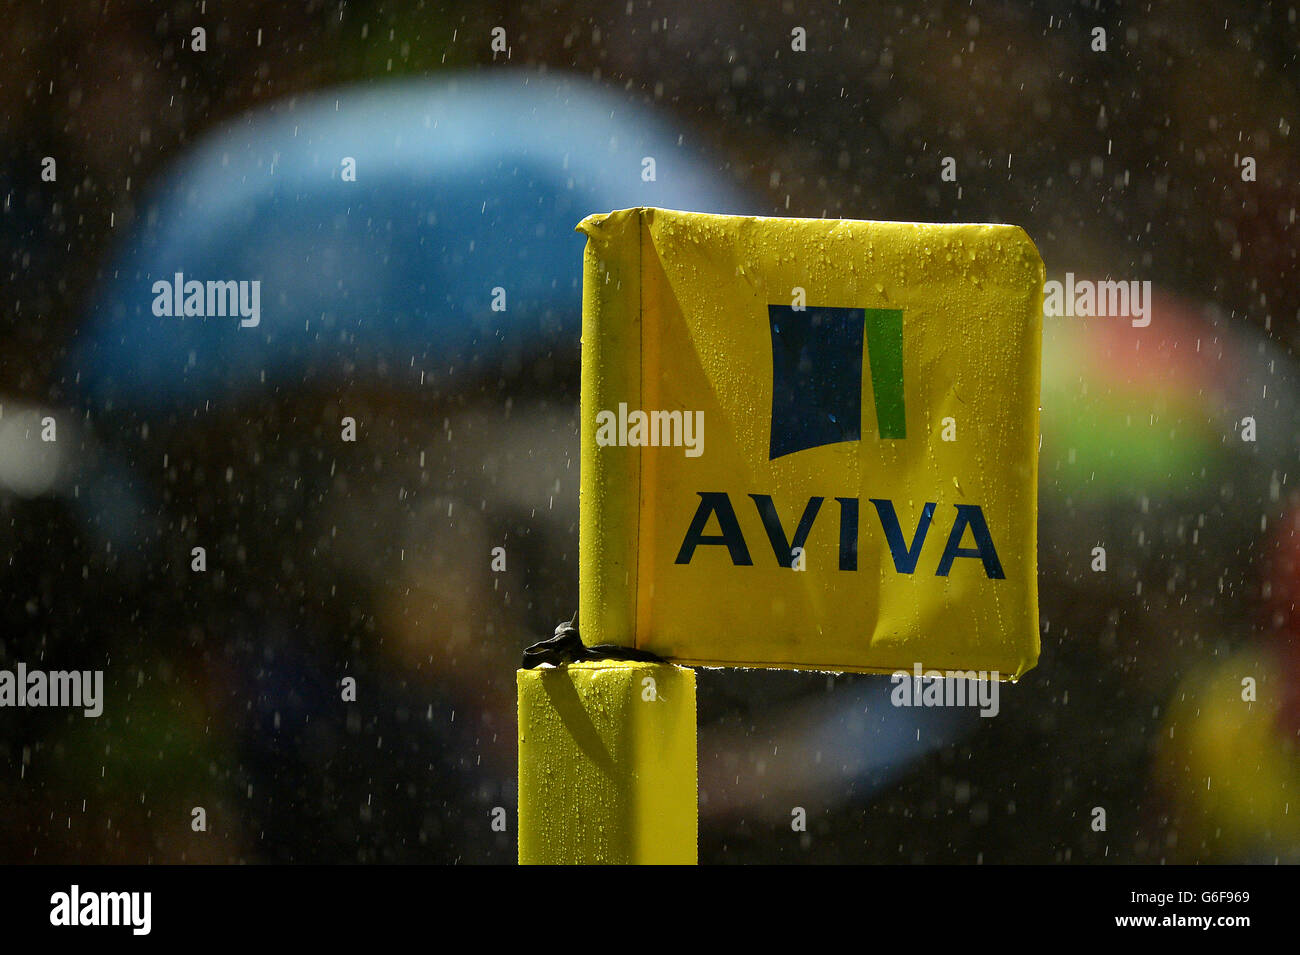 Rugby Union - Aviva Premiership - Harlequins v Northampton Saints - Twickenham Stoop. Detailed view of an Aviva branded corner flag while rain falls Stock Photo